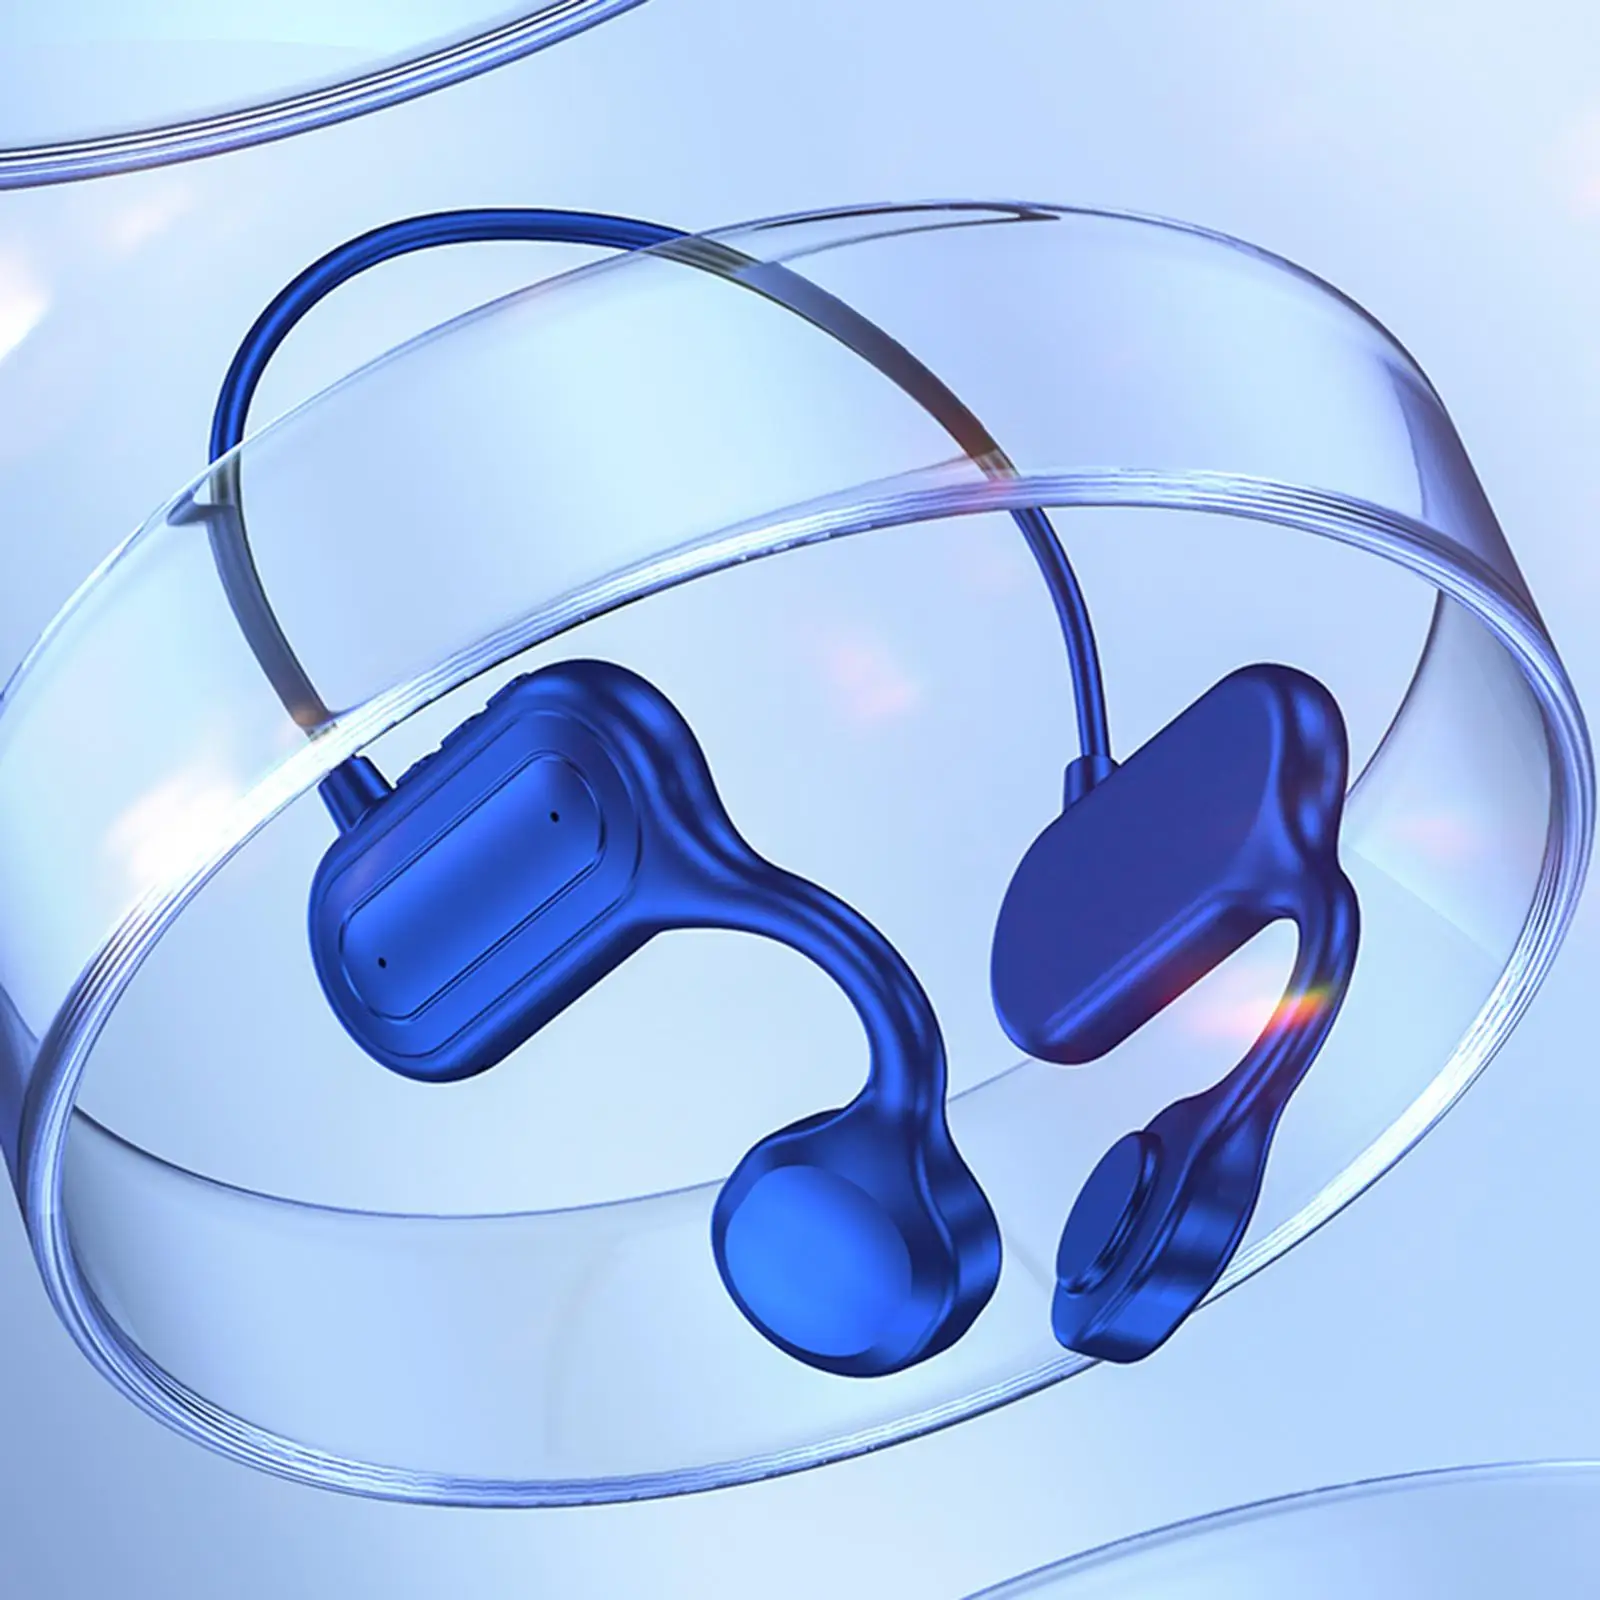 Bone Conduction Headphones, Running Wireless Bluetooth Open Ear Sweatproof Driving HiFi Support TF Card Stereo Earphones Meeting